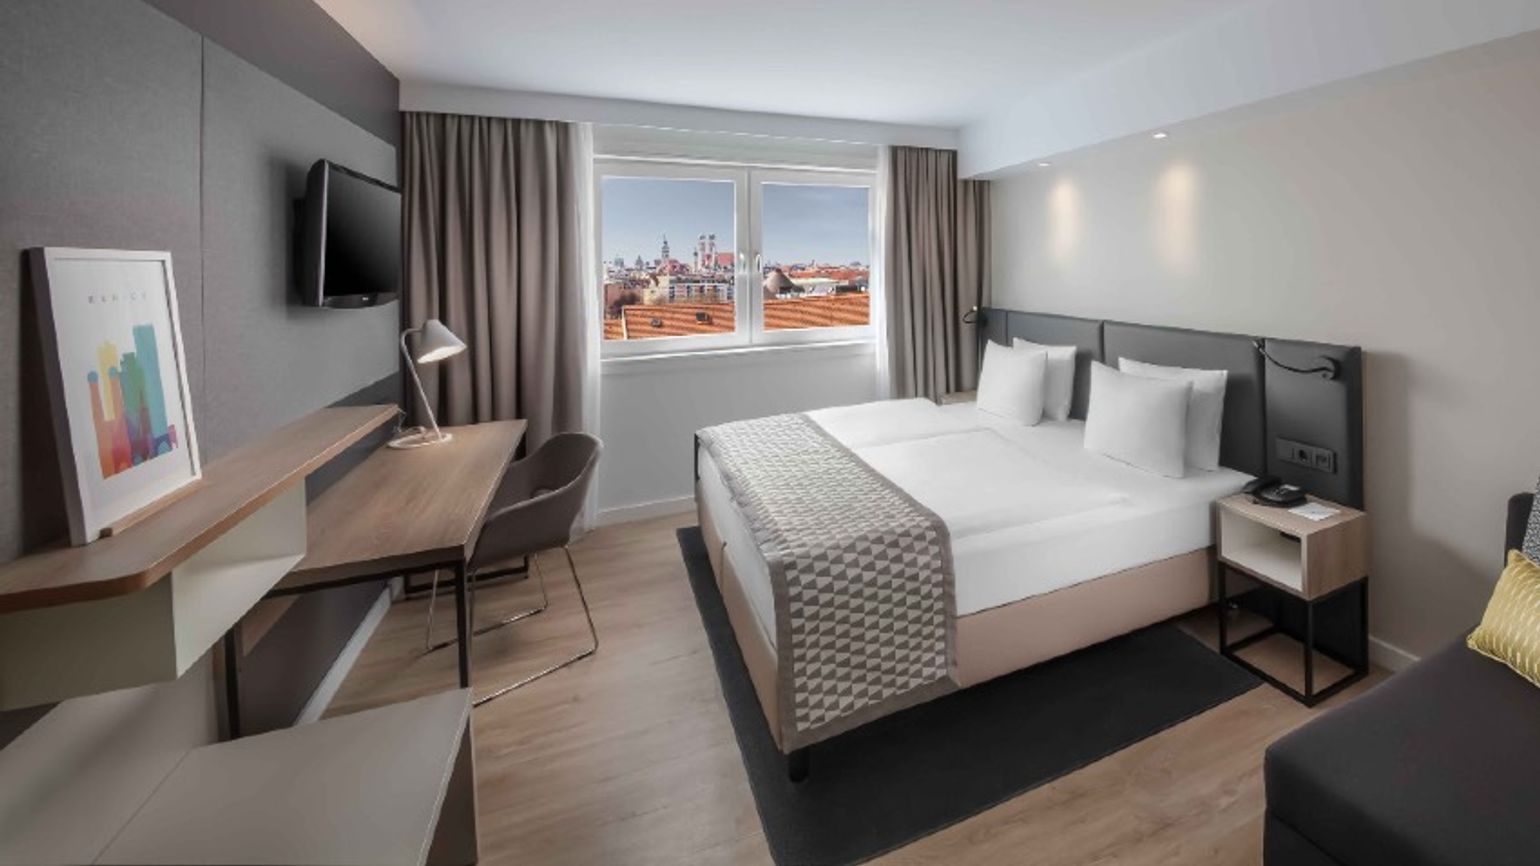 IHG doubles German hotels with NOVUM Hospitality deal